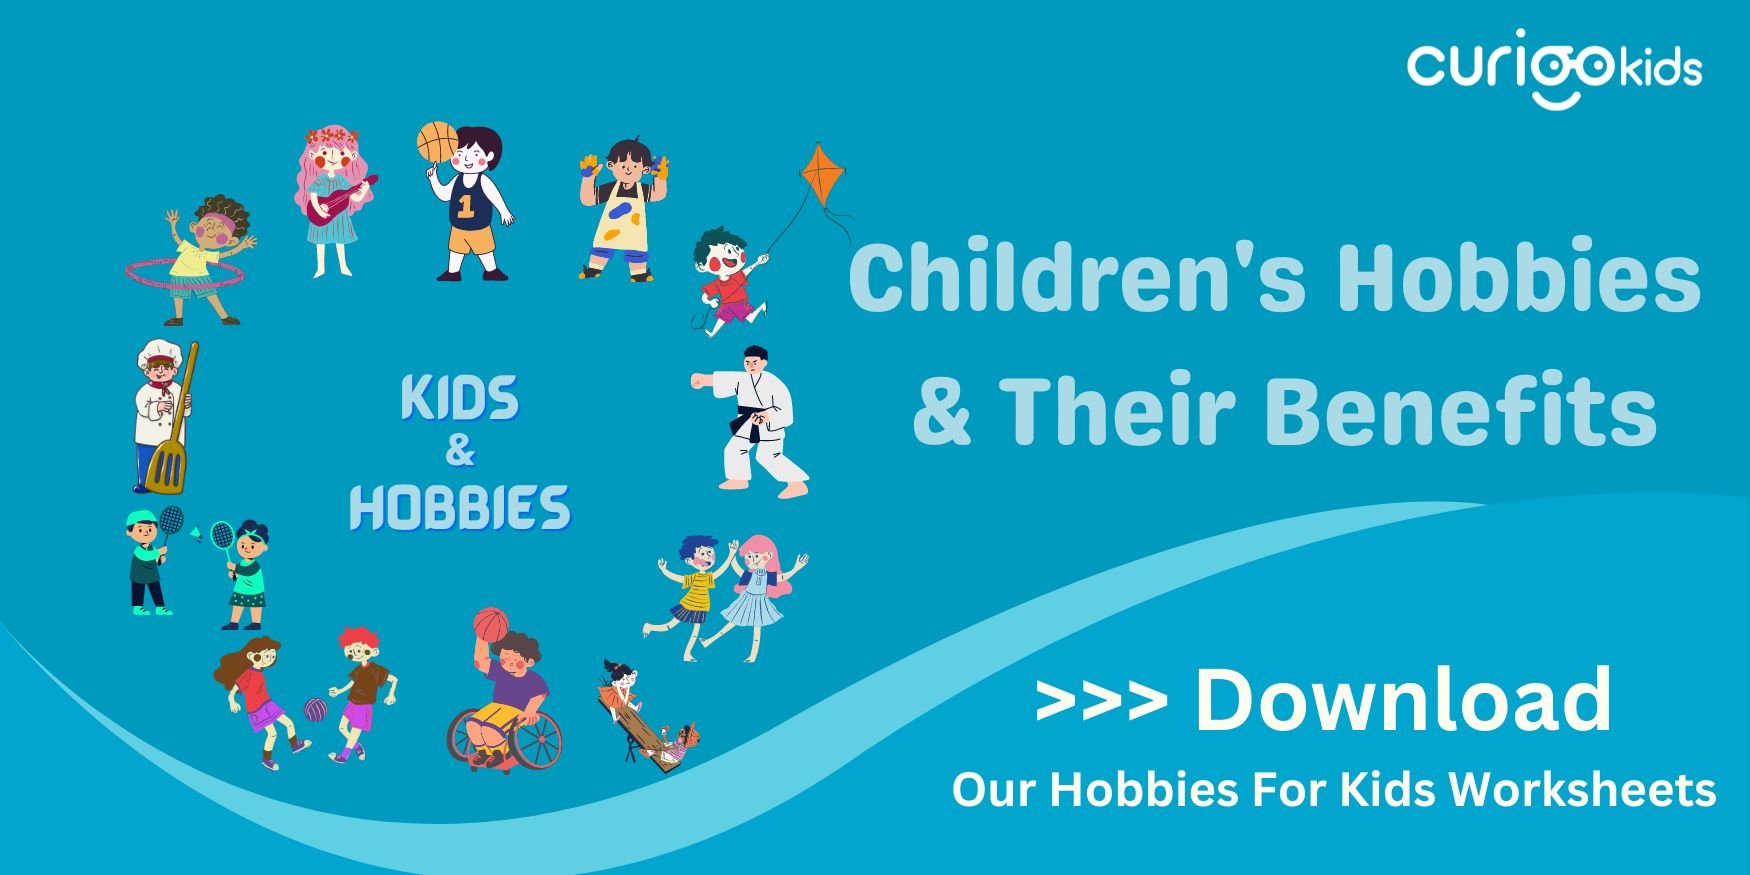 Childrens hobbies &their benefits 1